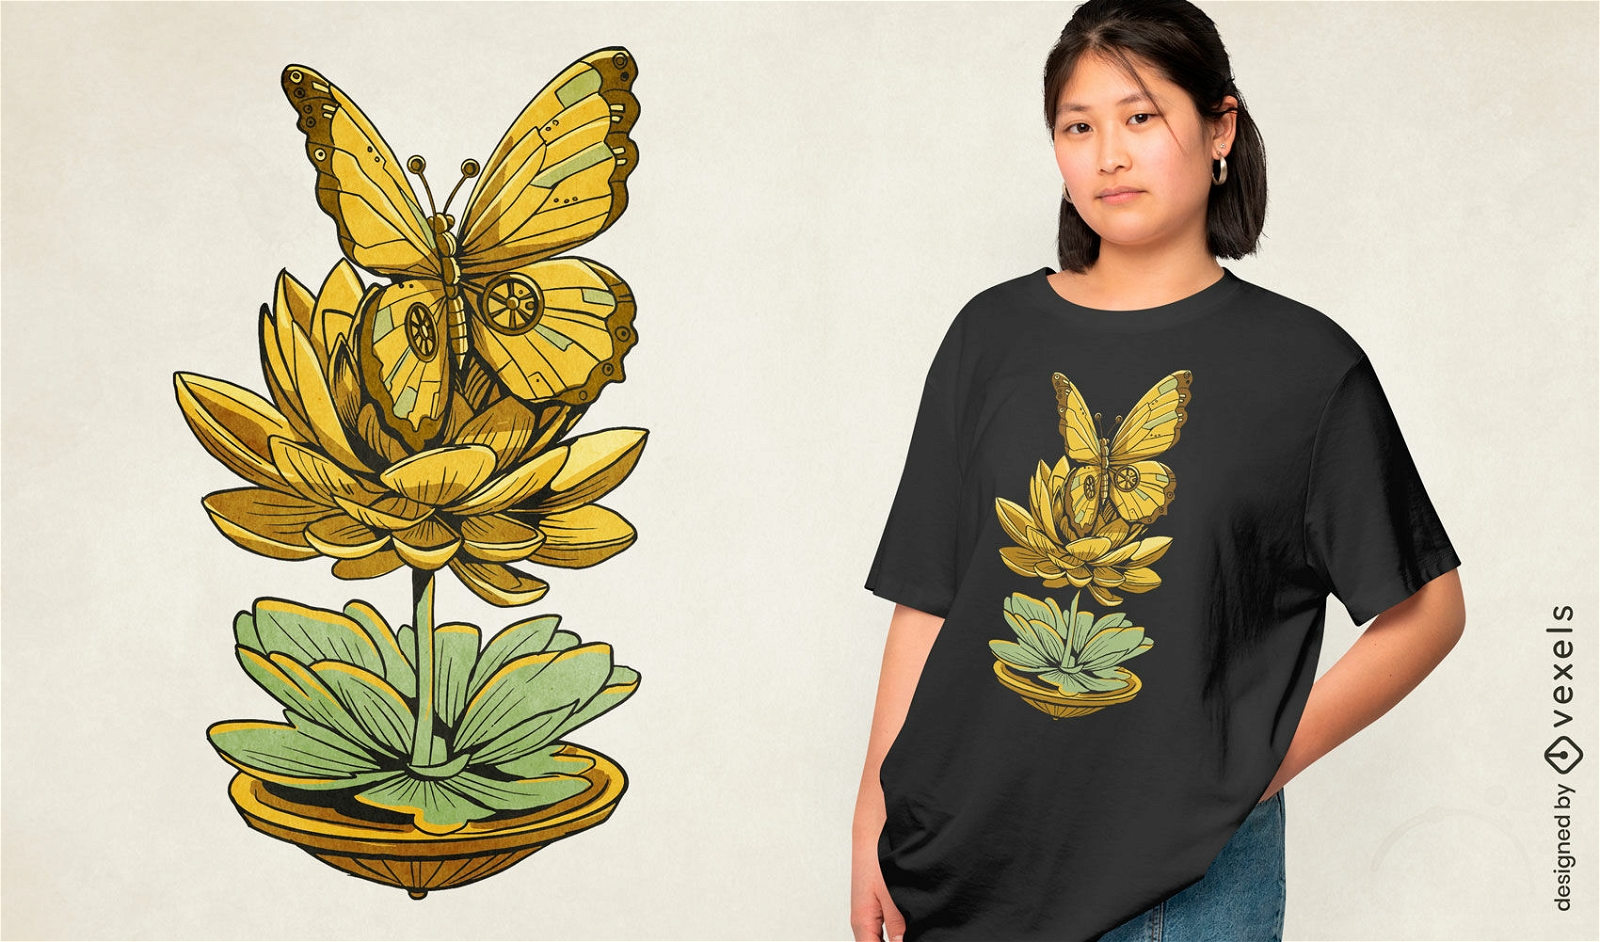 Steampunk-inspired butterfly t-shirt design